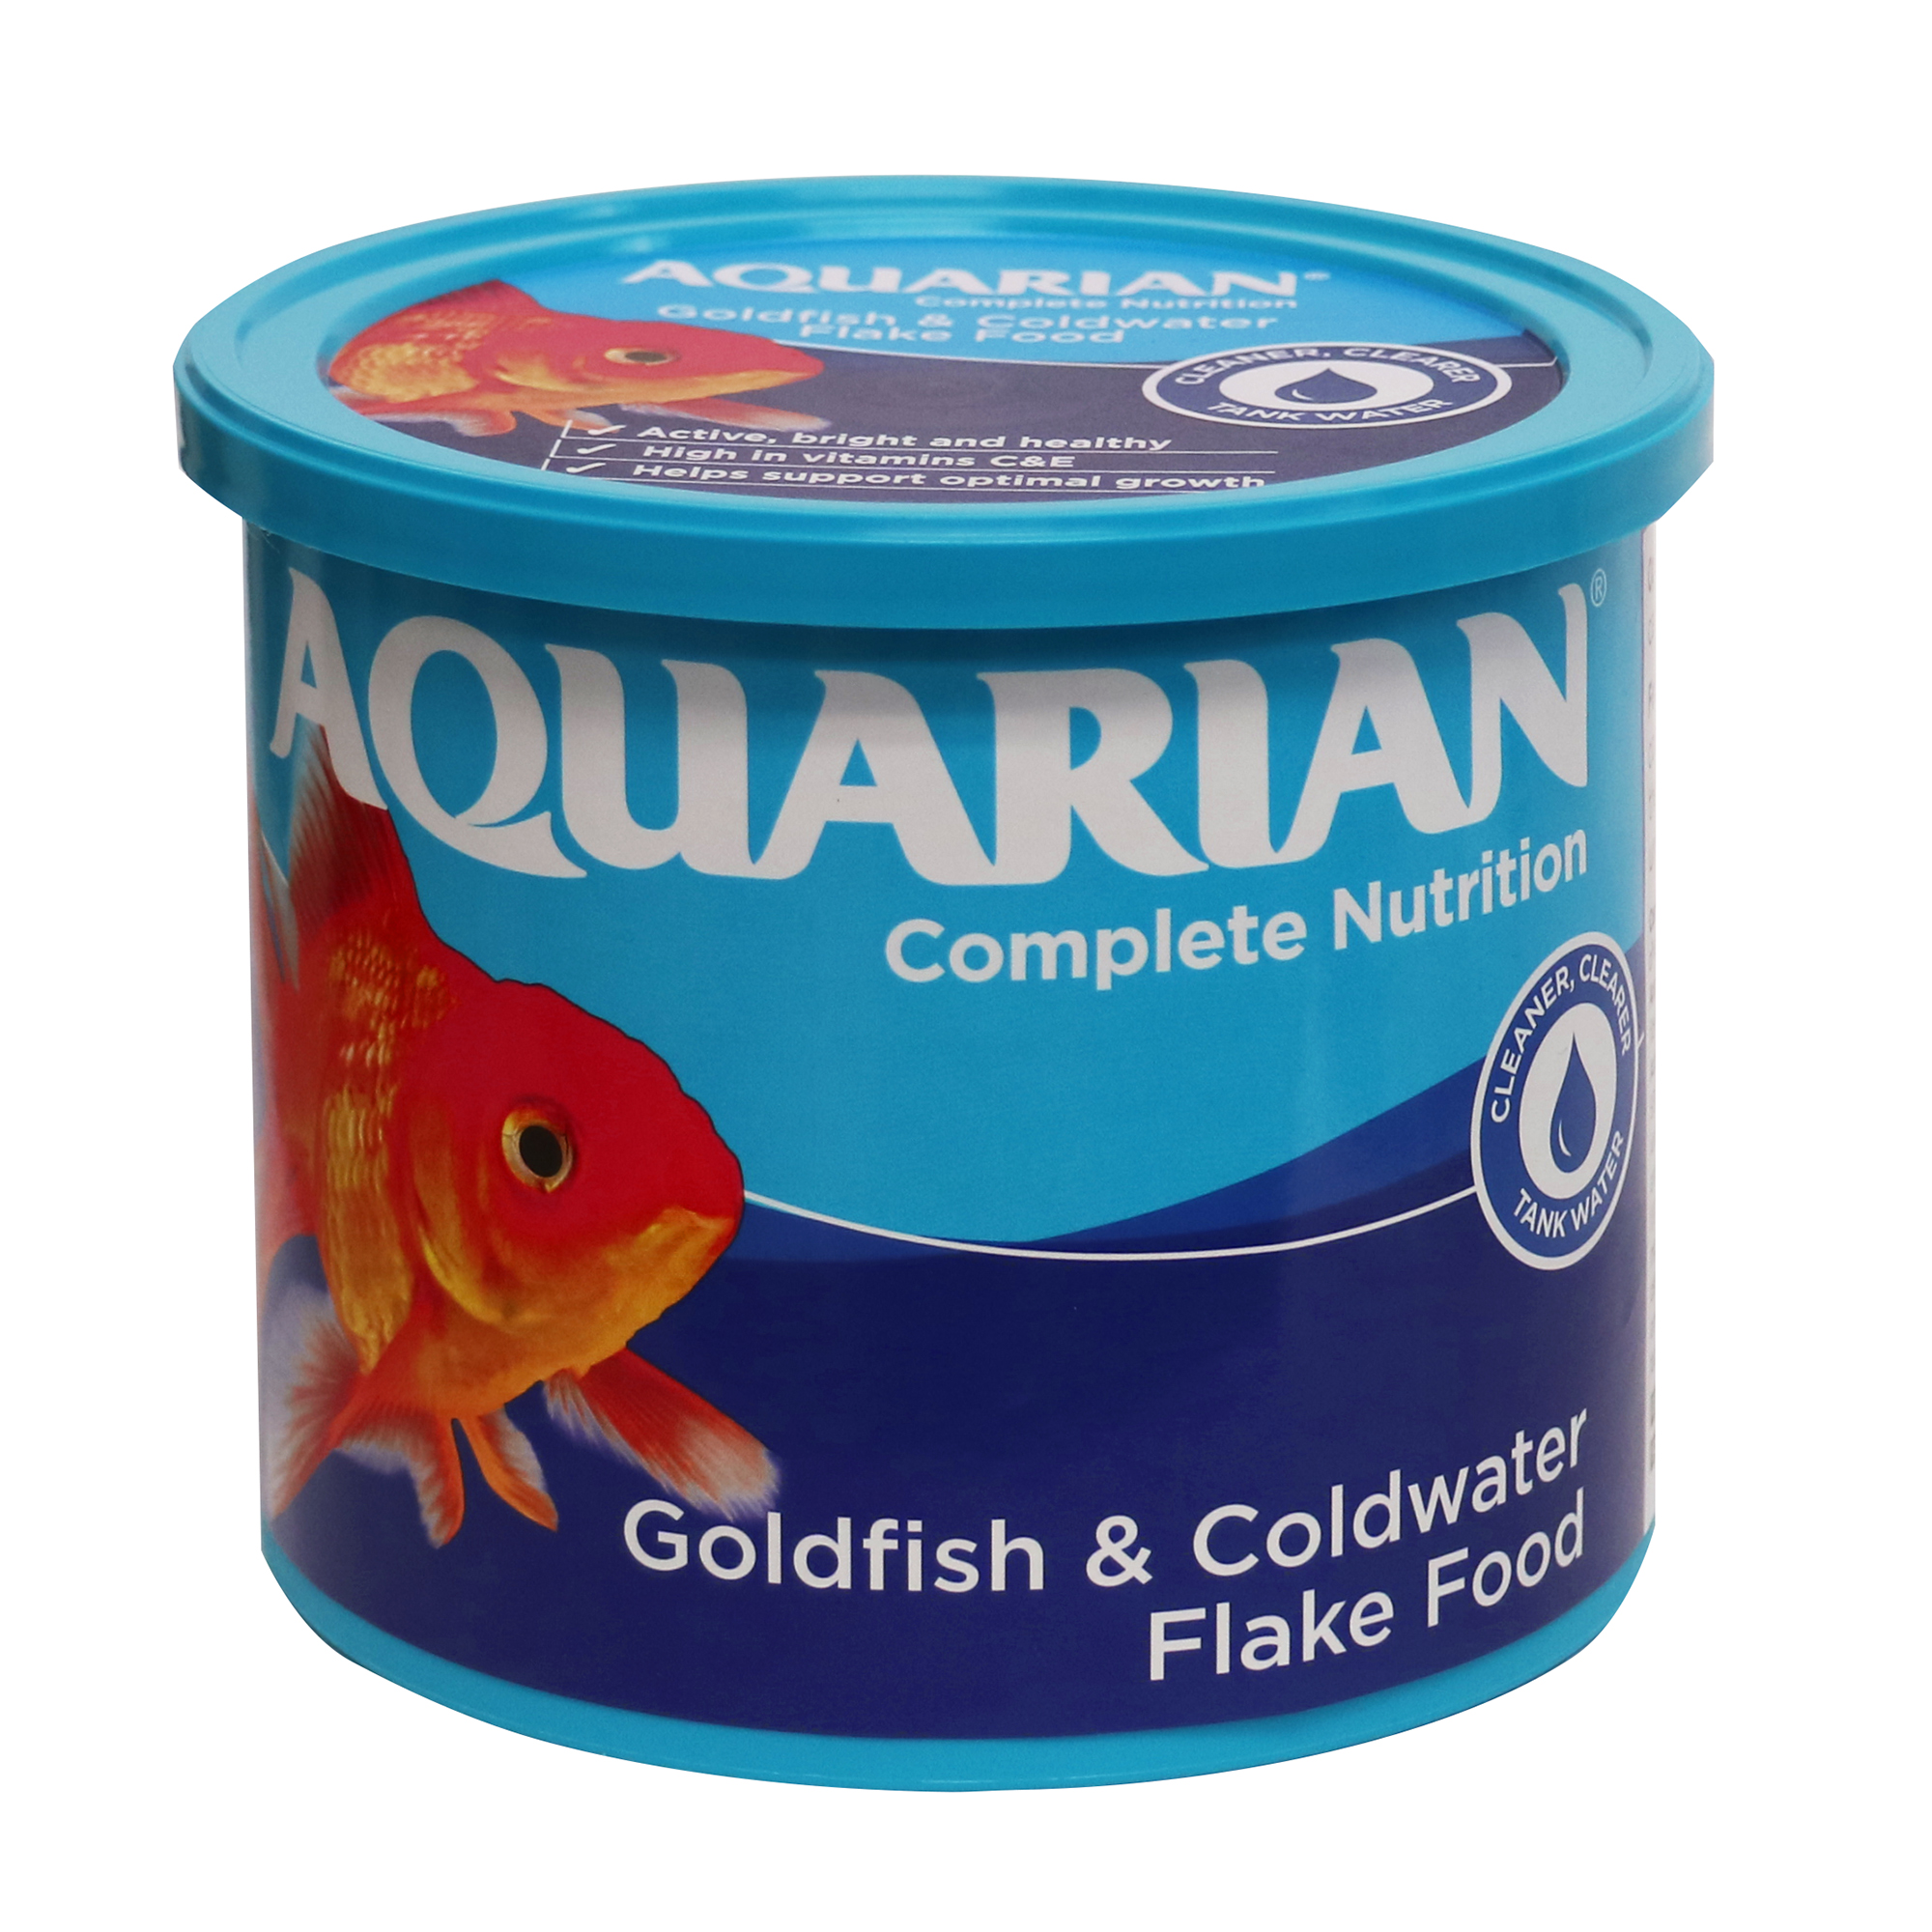 aquadine spirulina dura flake fish food